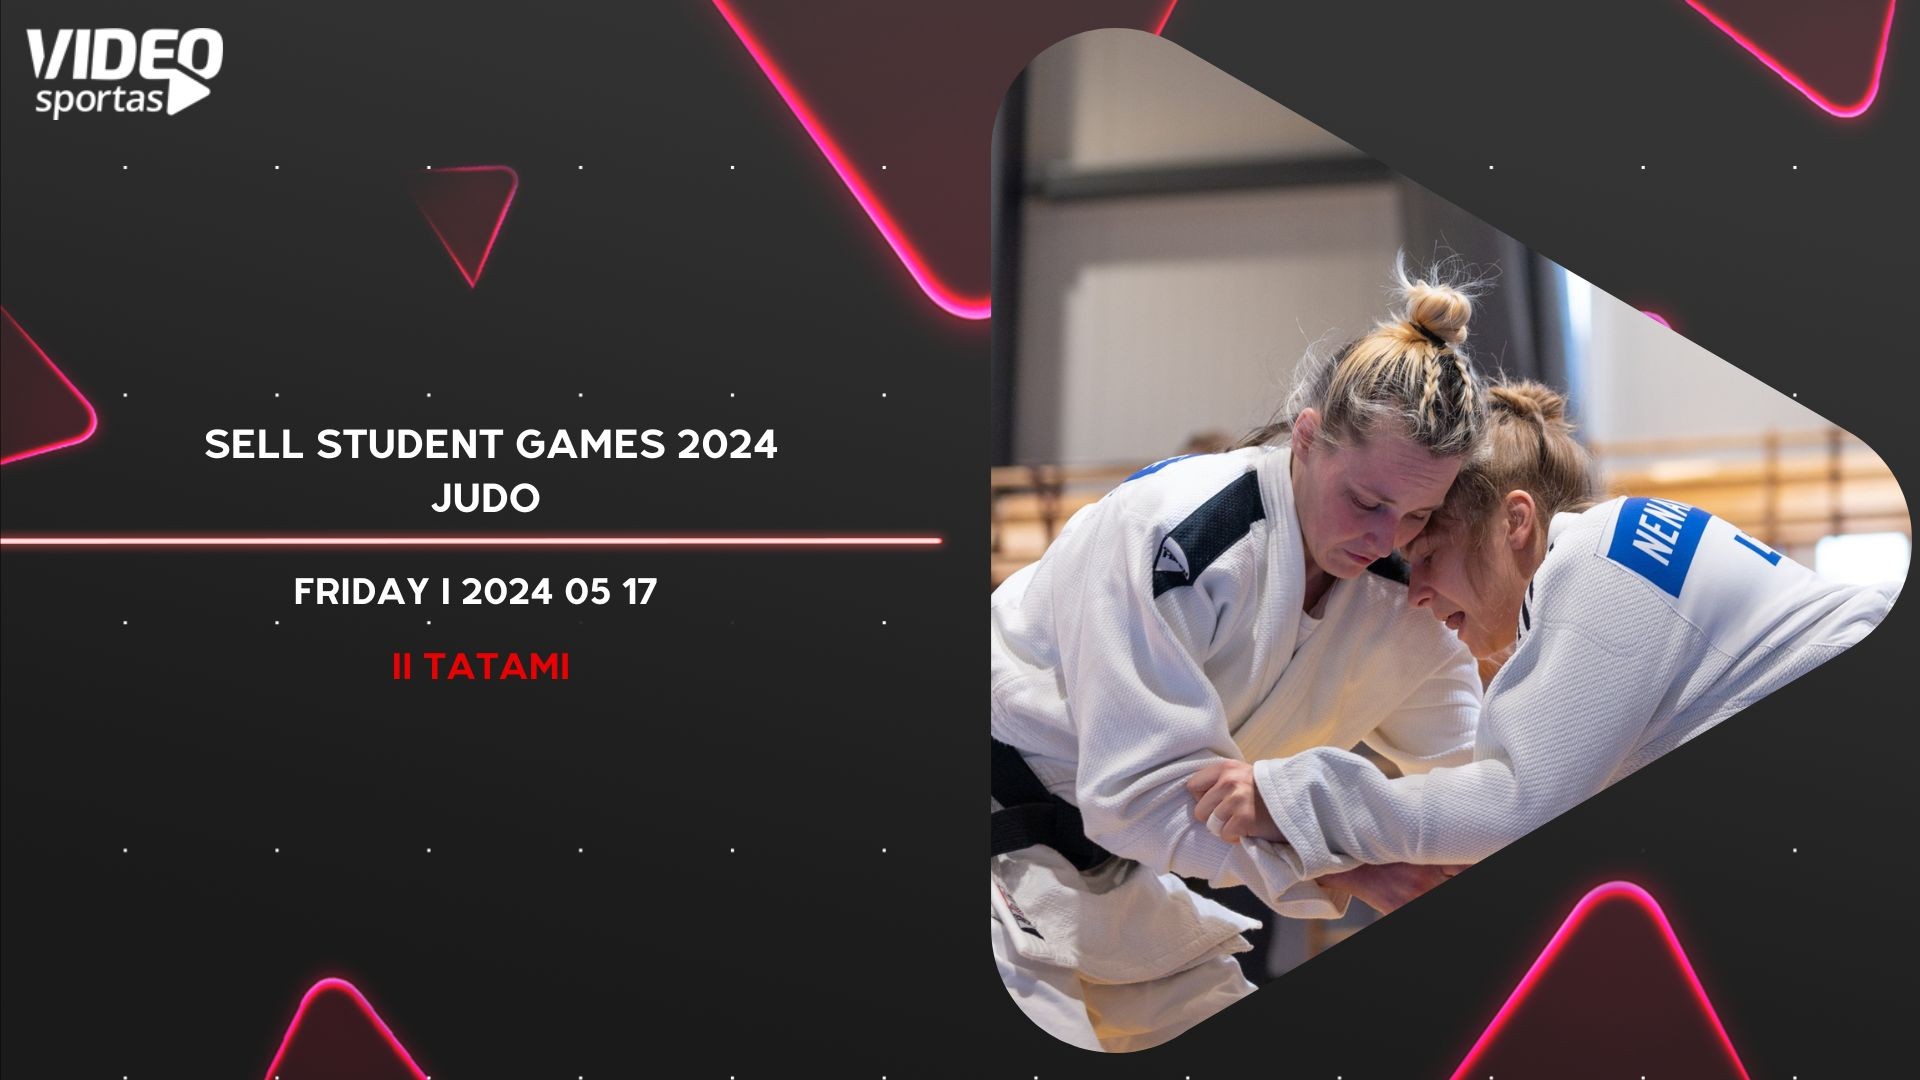 II TATAMI - SELL STUDENT GAMES 2024 (JUDO)